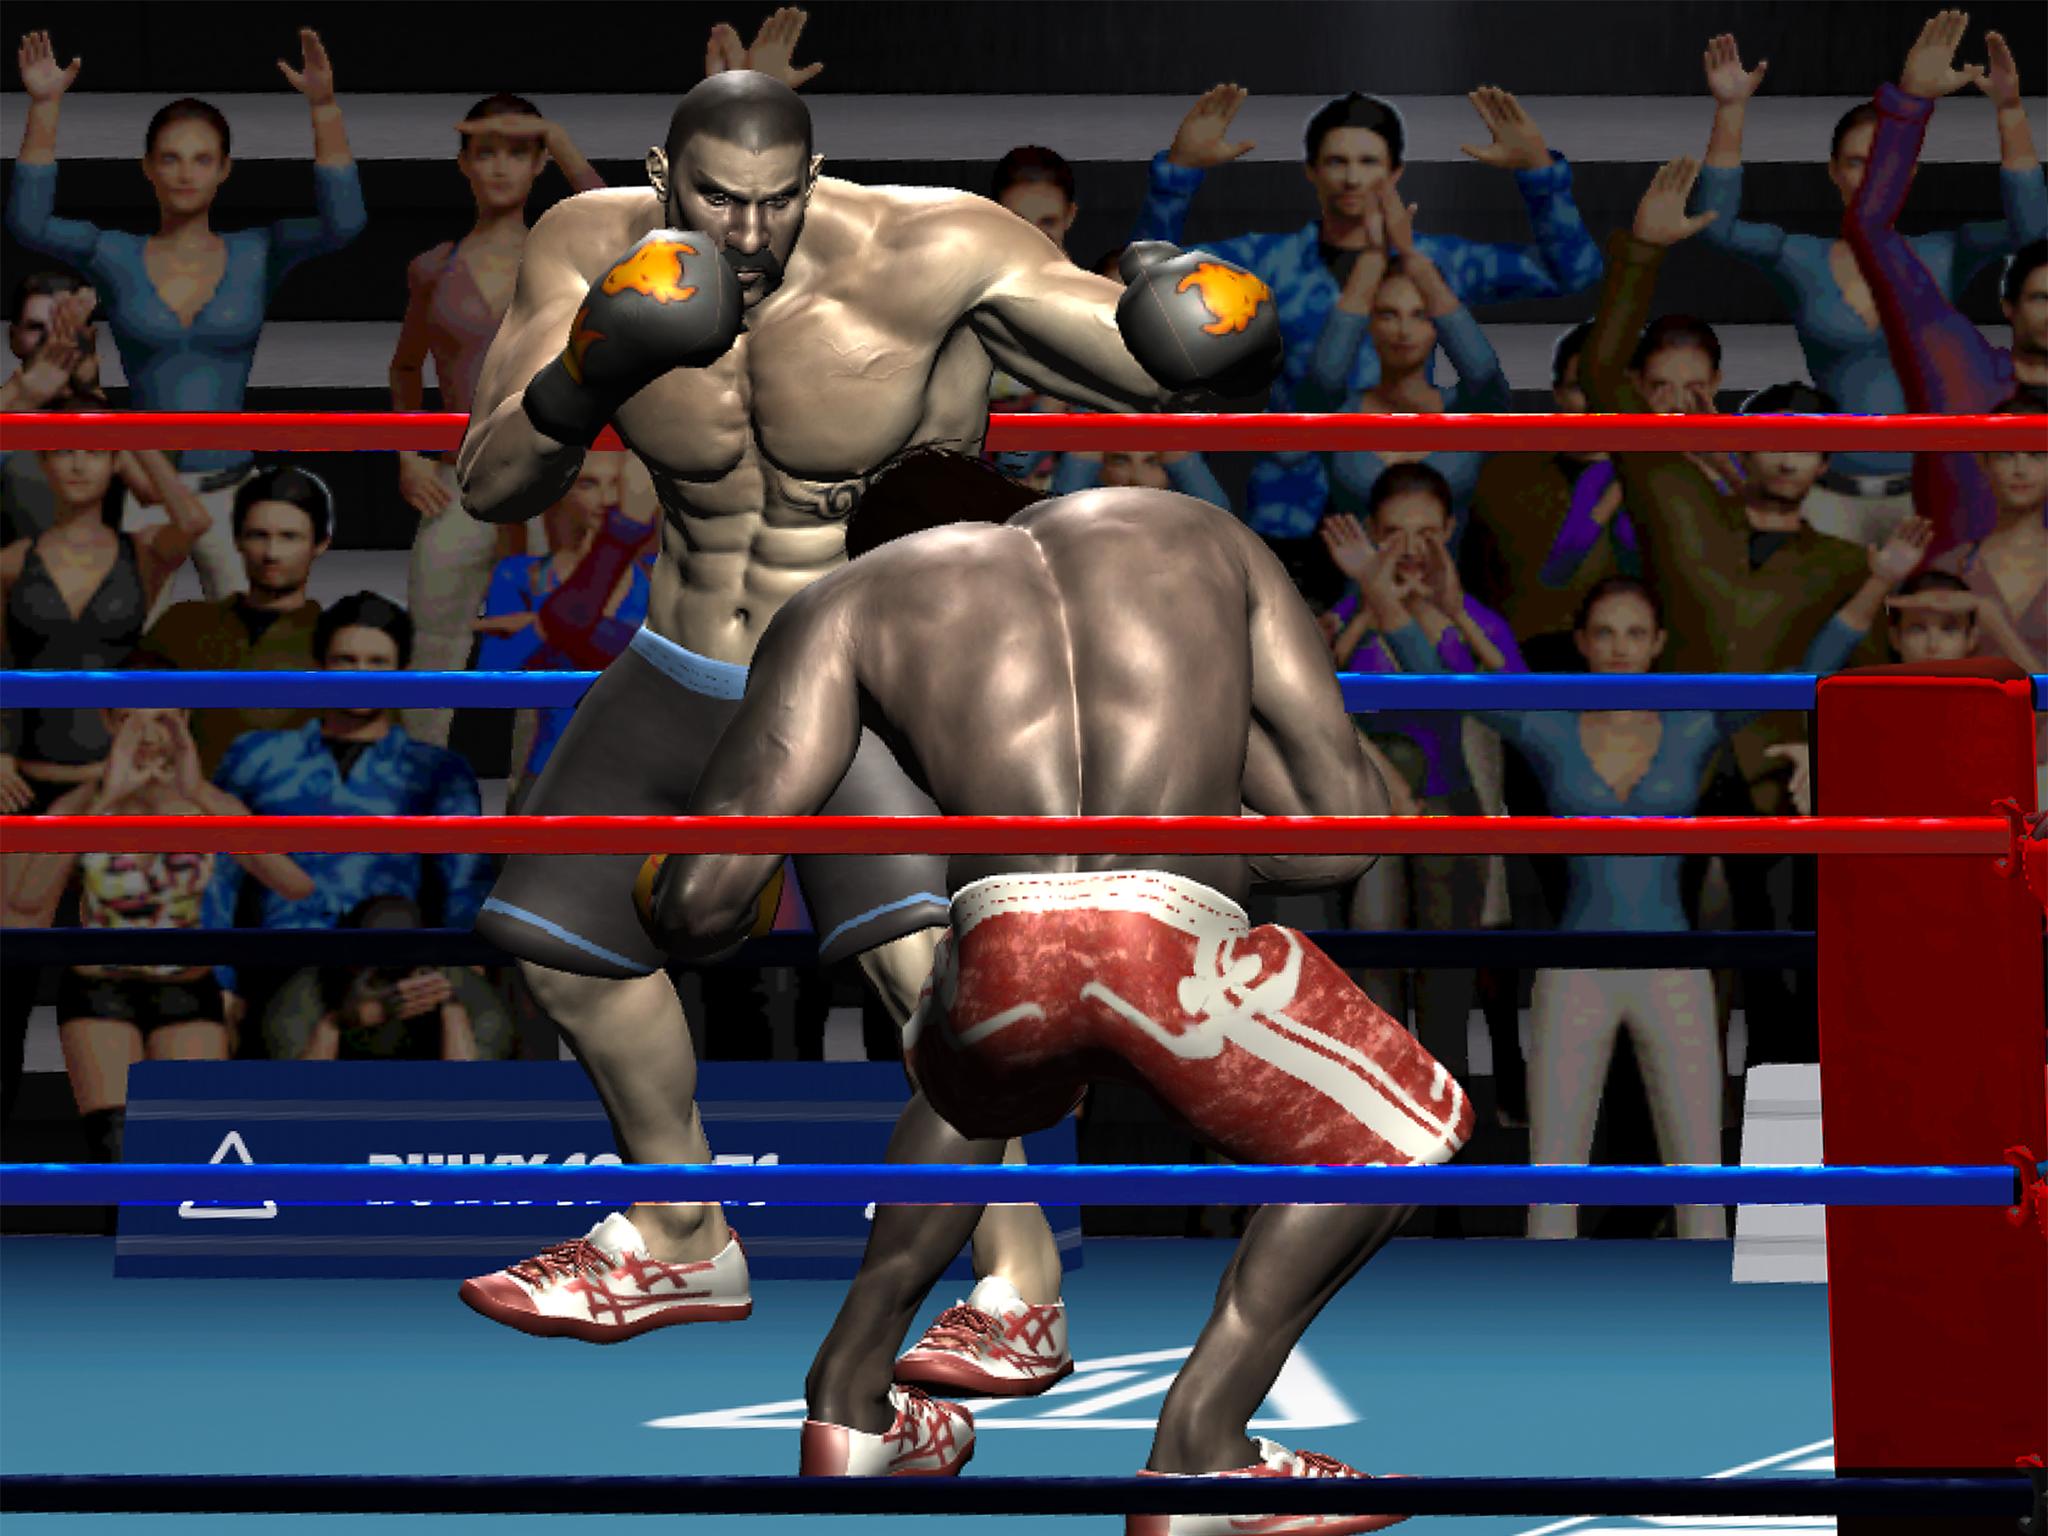 Ps3 boxing. Boxing игра. 3d boks игра. Игры про боксы про бокс. Игра бокс 2010.